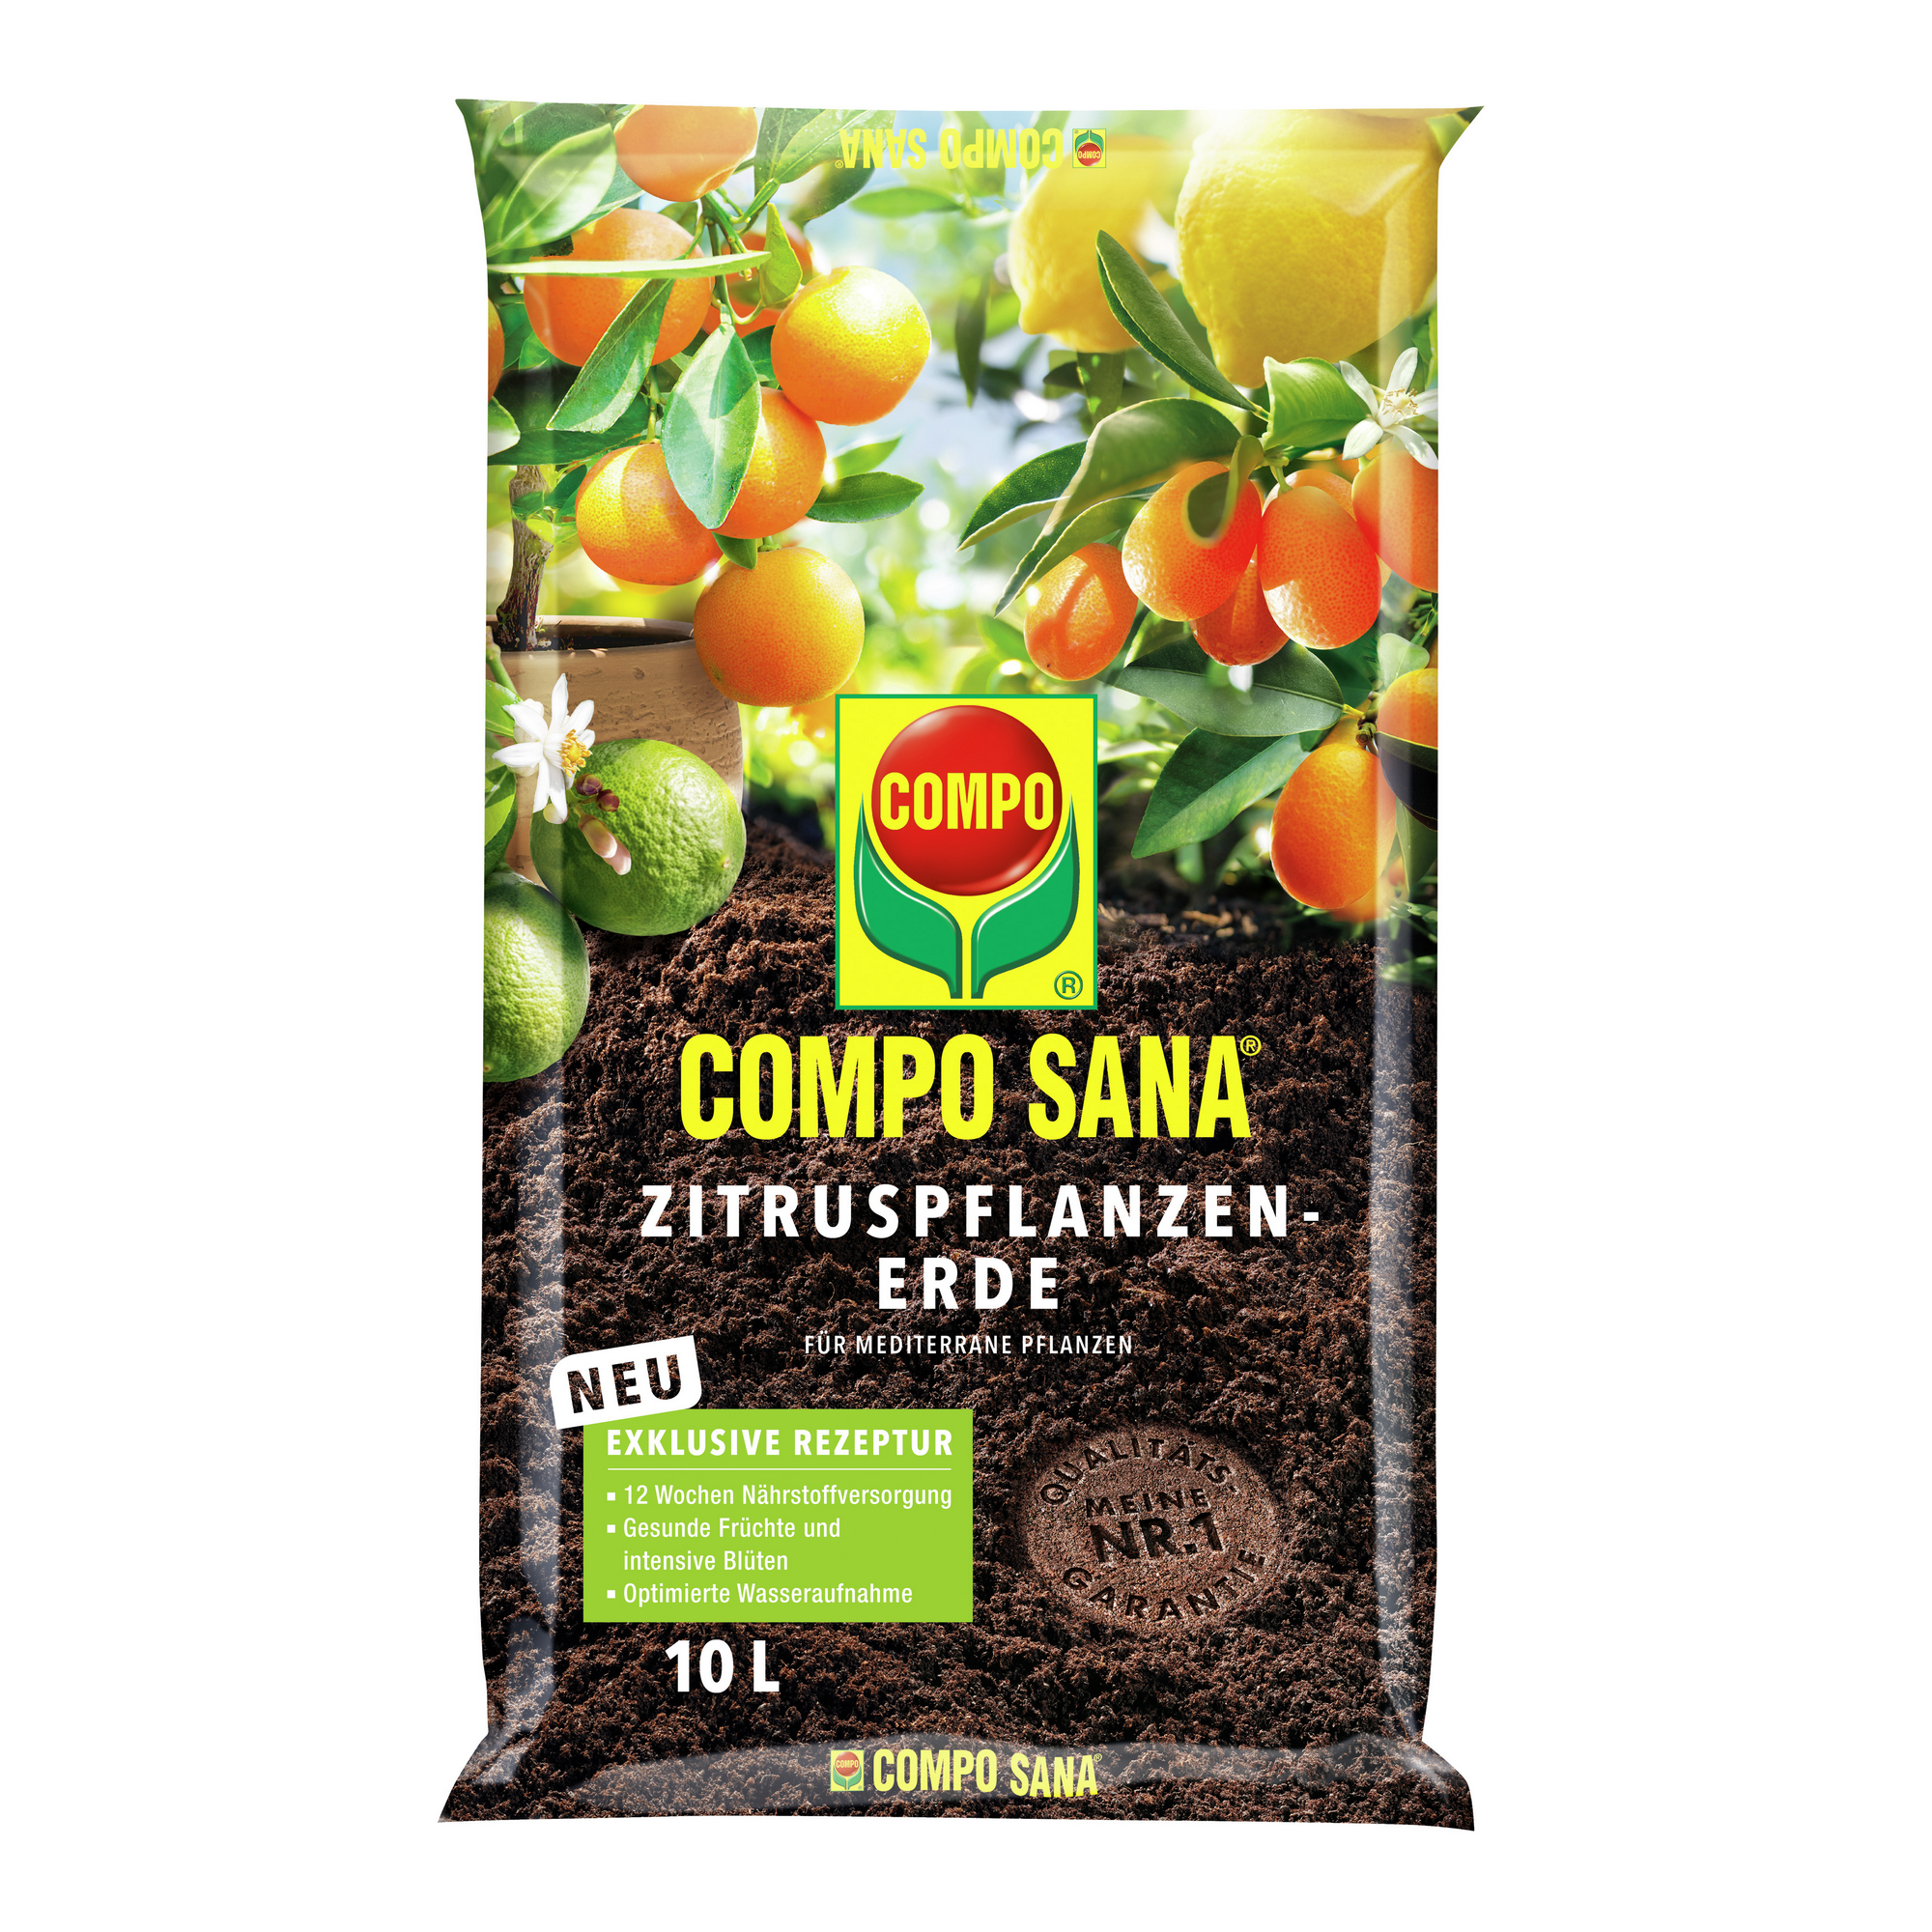 Compo Sana® Zitruspflanzenerde 10 l + product picture